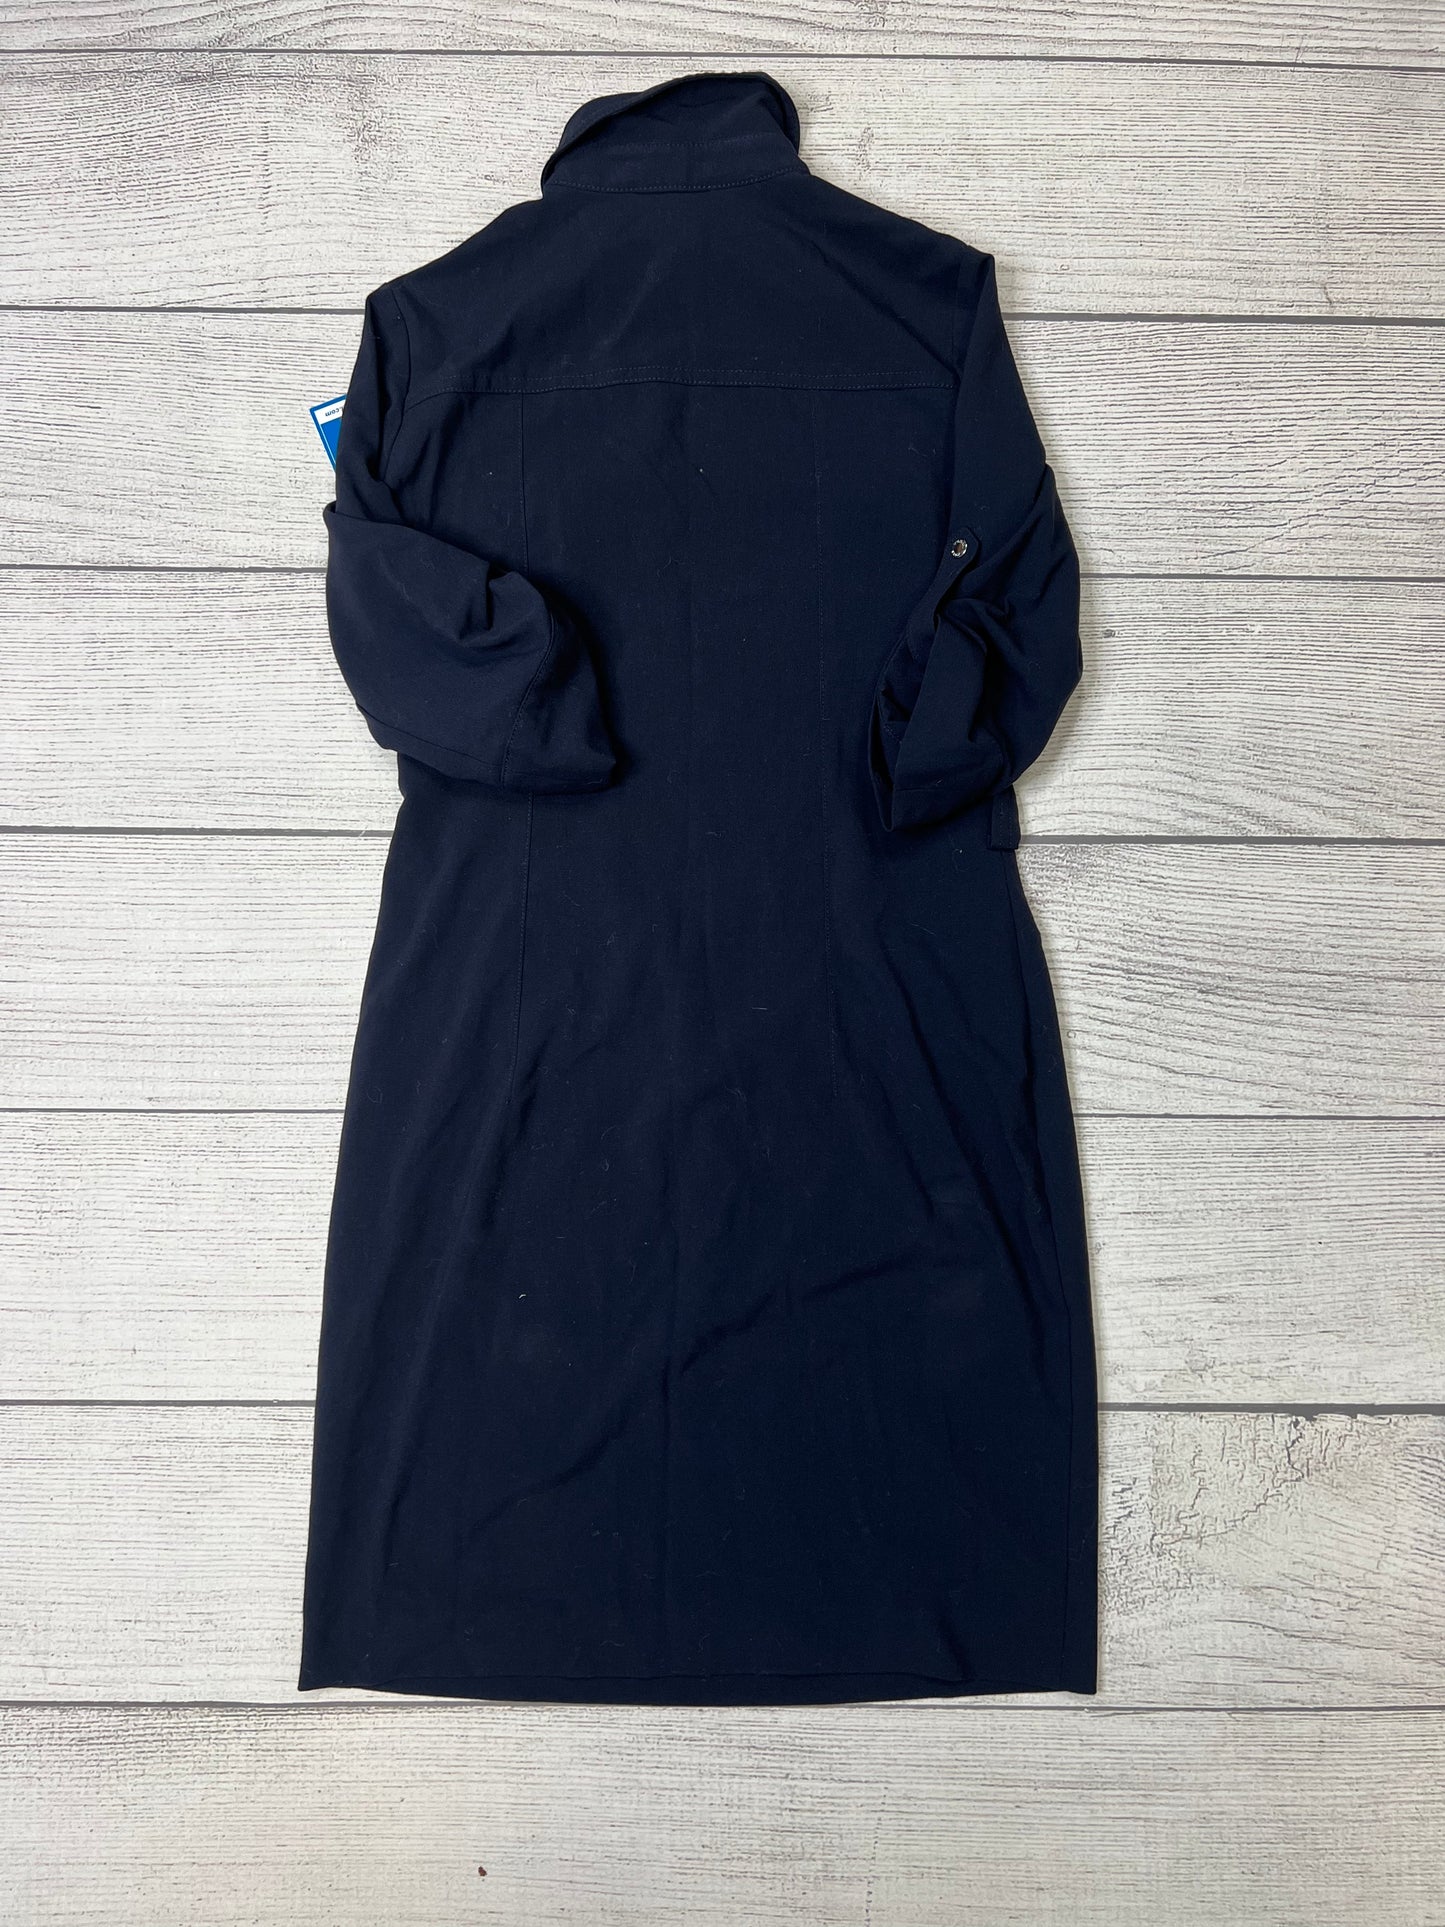 Dress Designer By Michael Kors  Size: Xs